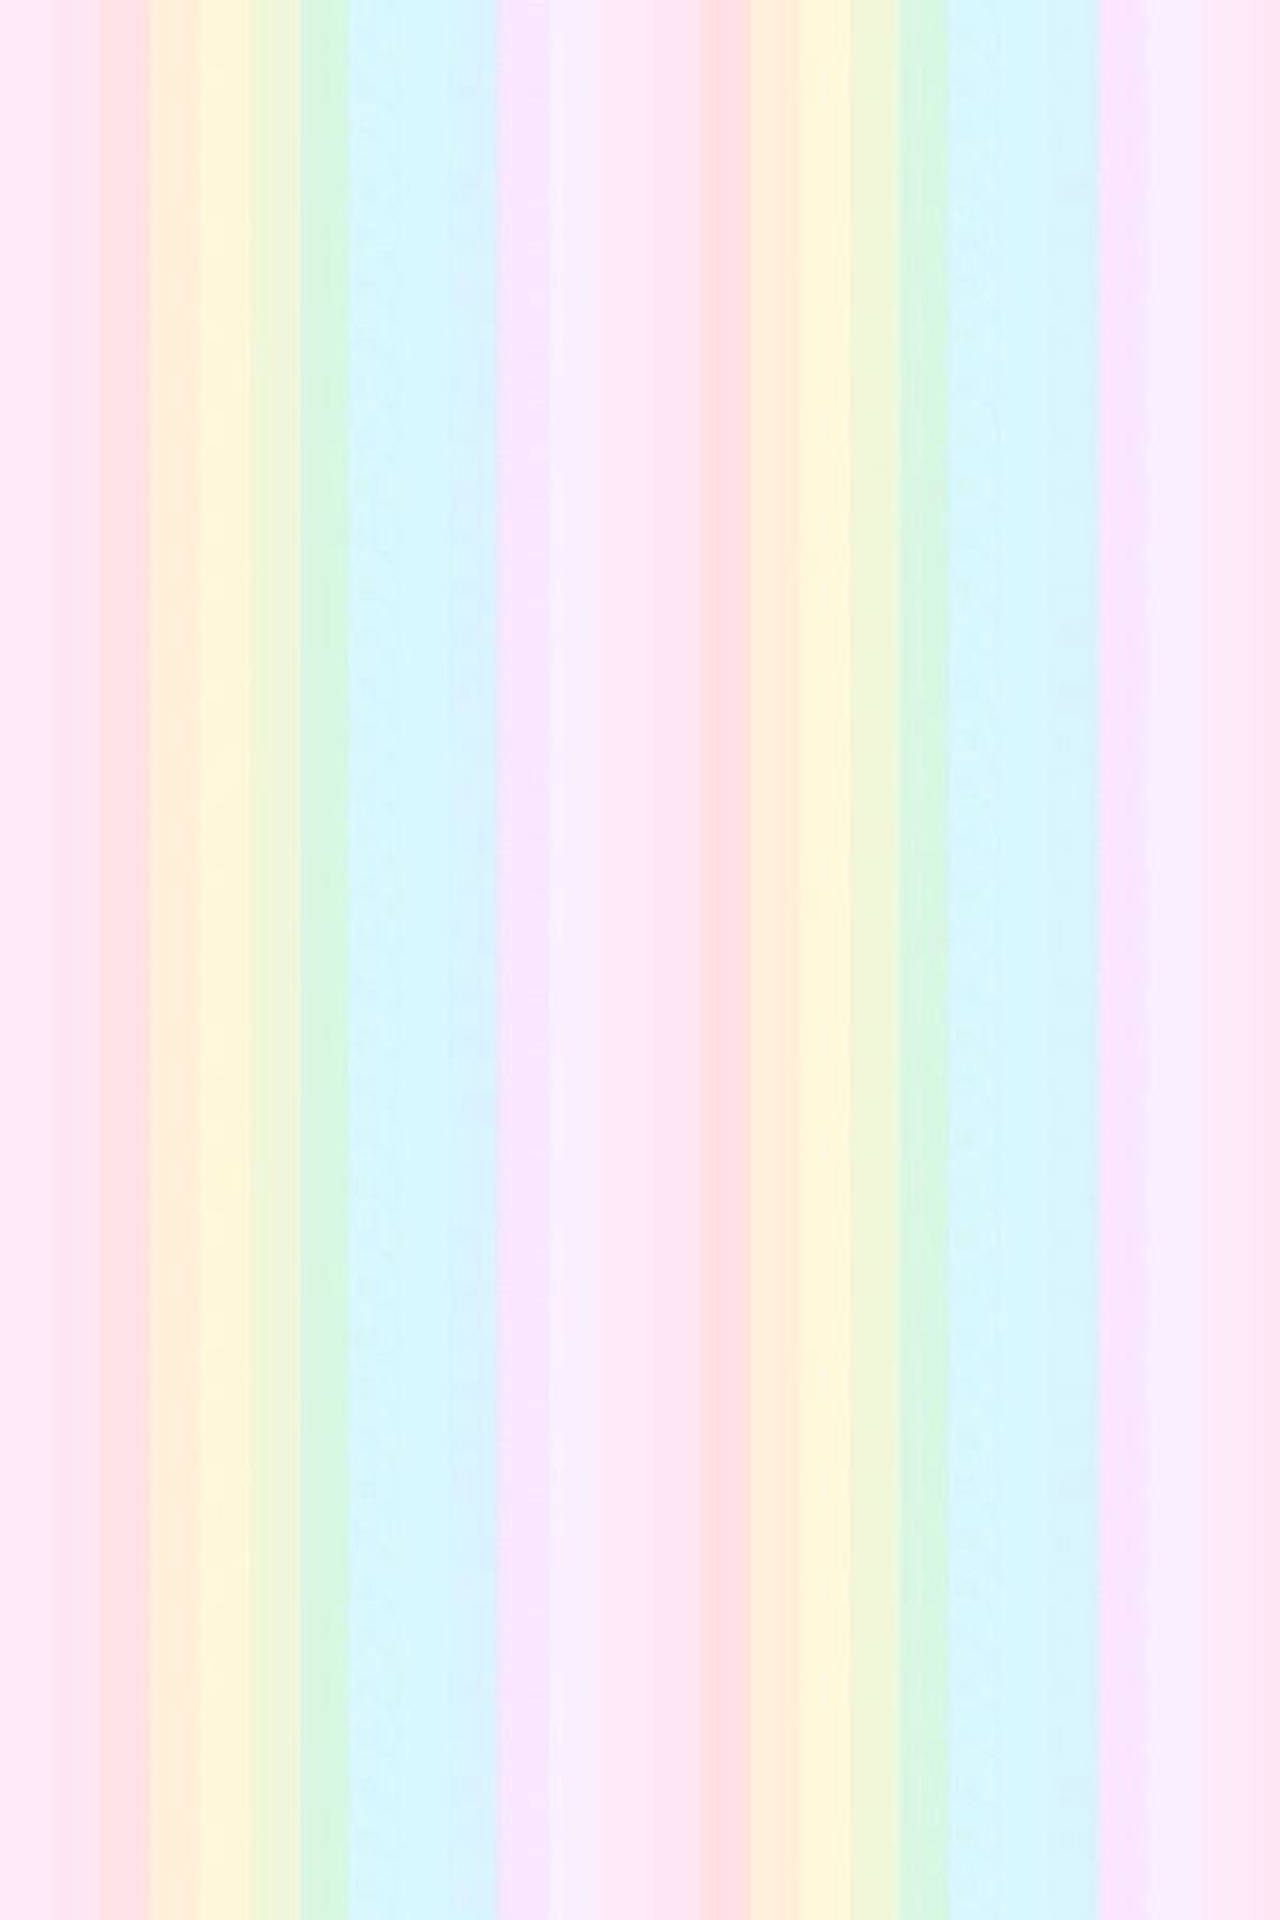 Rainbow Stripes in Pastel Color Palette Wallpaper